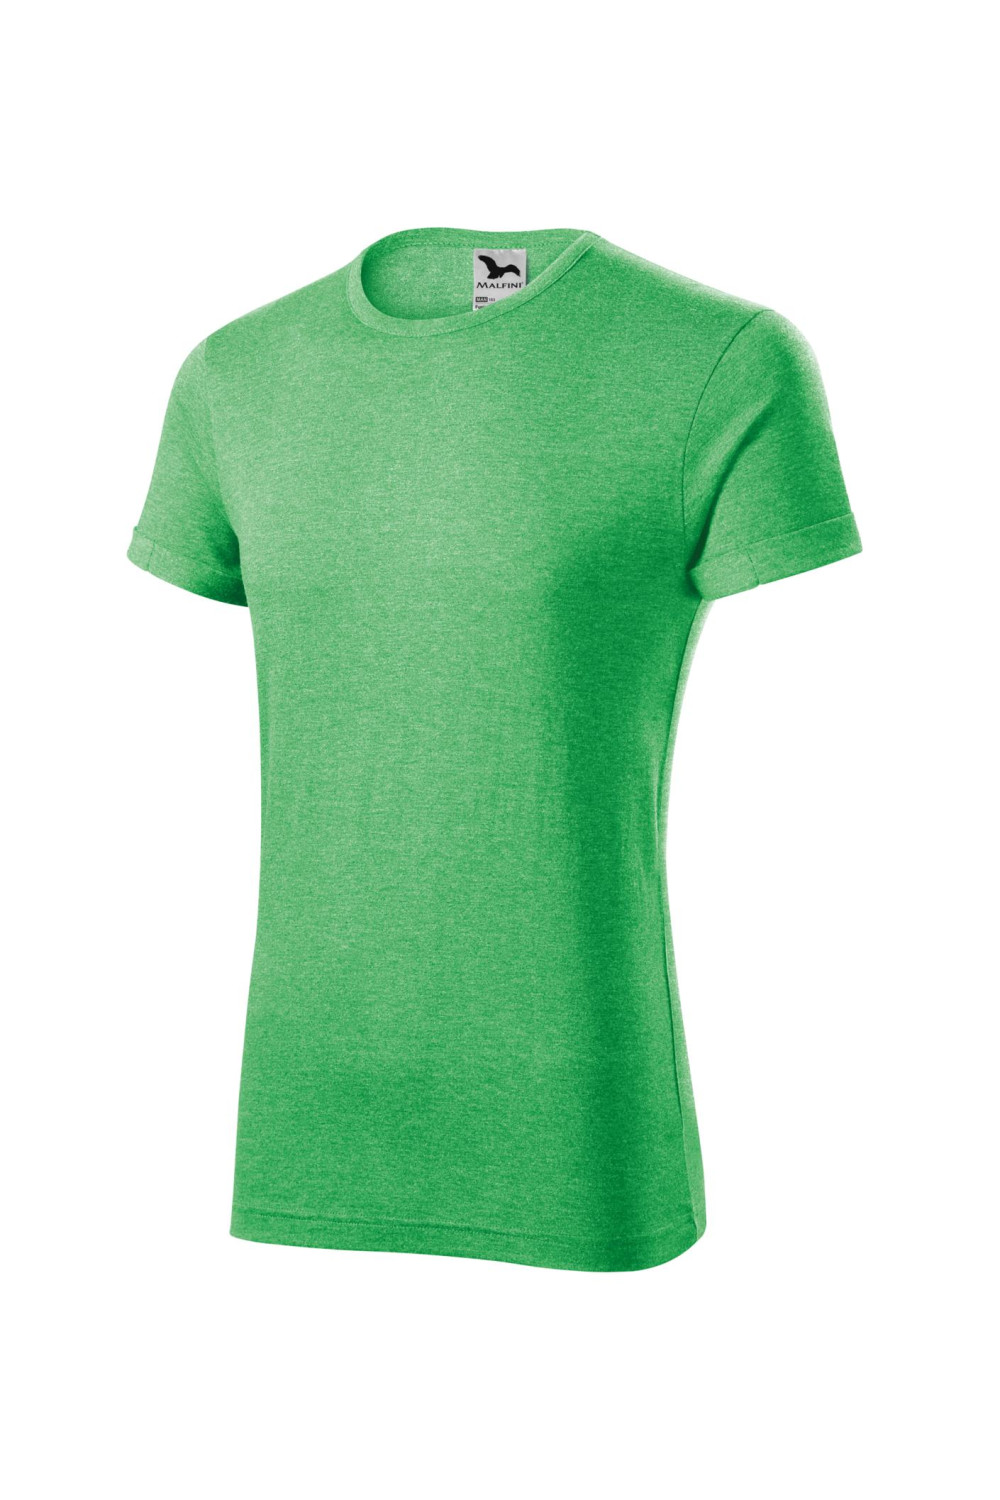 Koszulka męska melanżowa FUSION 163 koszulki / T-shirt zielony melanż M6